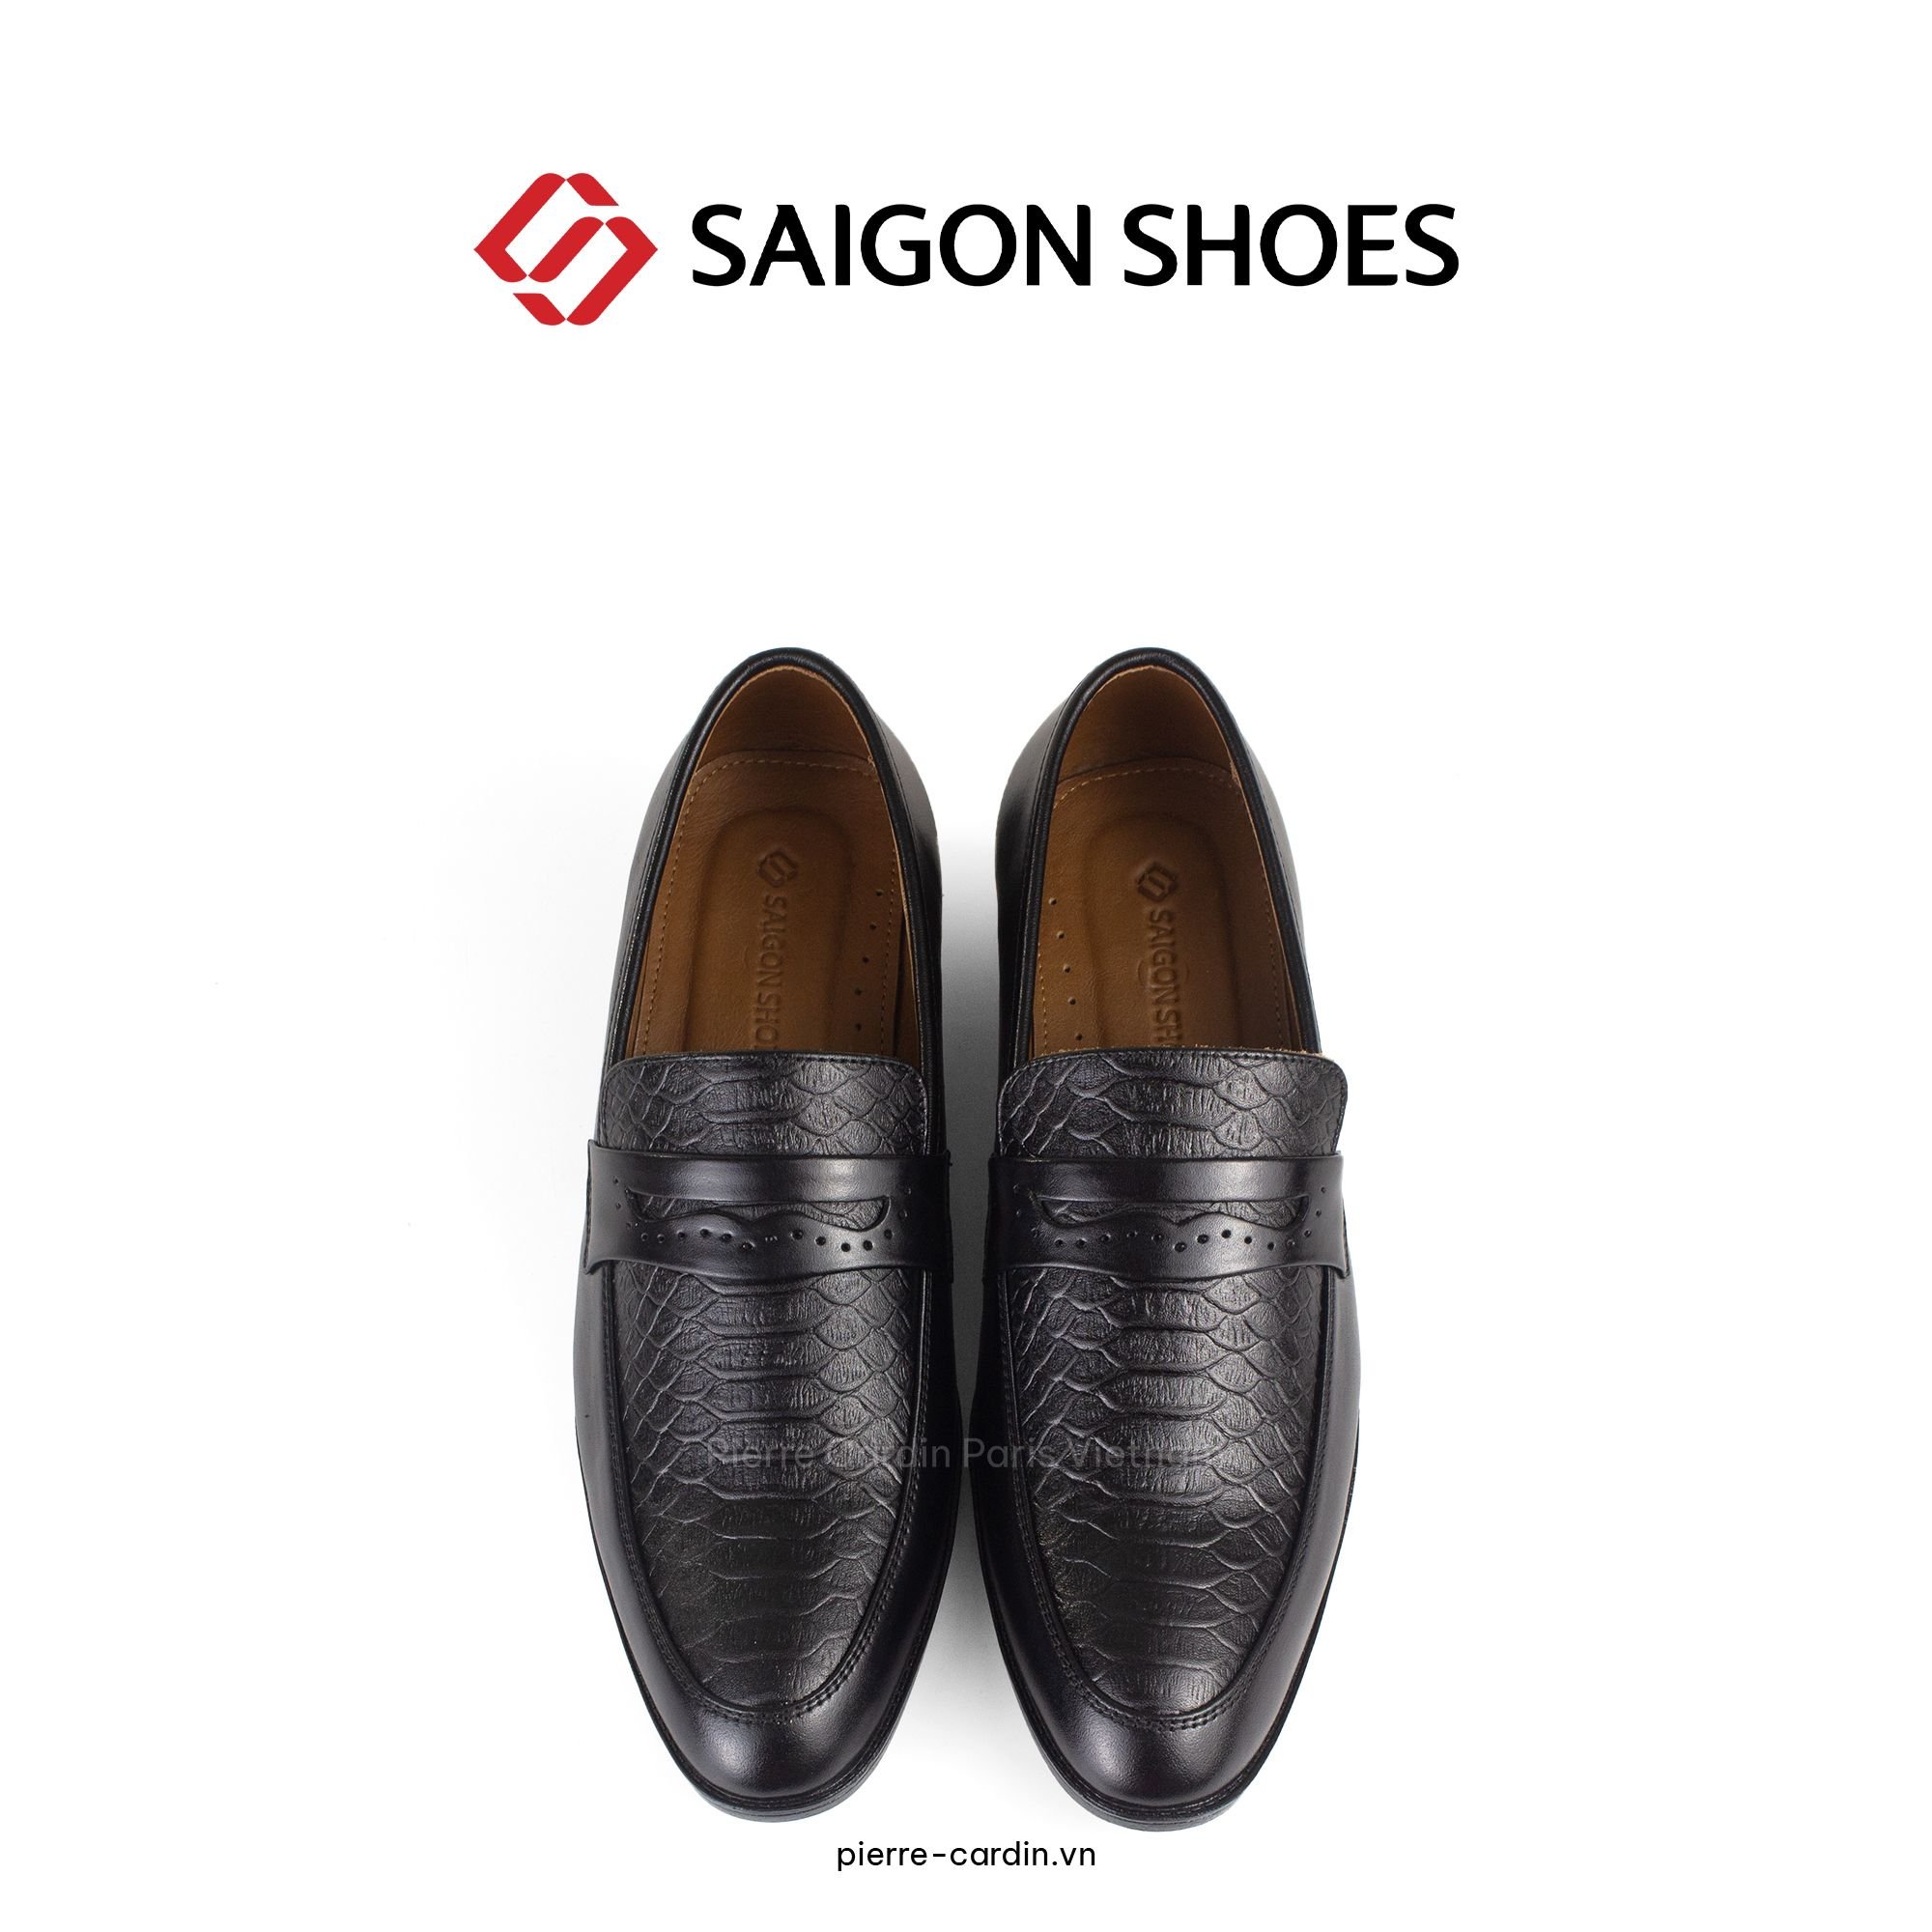 Pierre Cardin Paris Vietnam: Giày Lười Saigon Shoes - SGMFWLH 003 (BLACK)